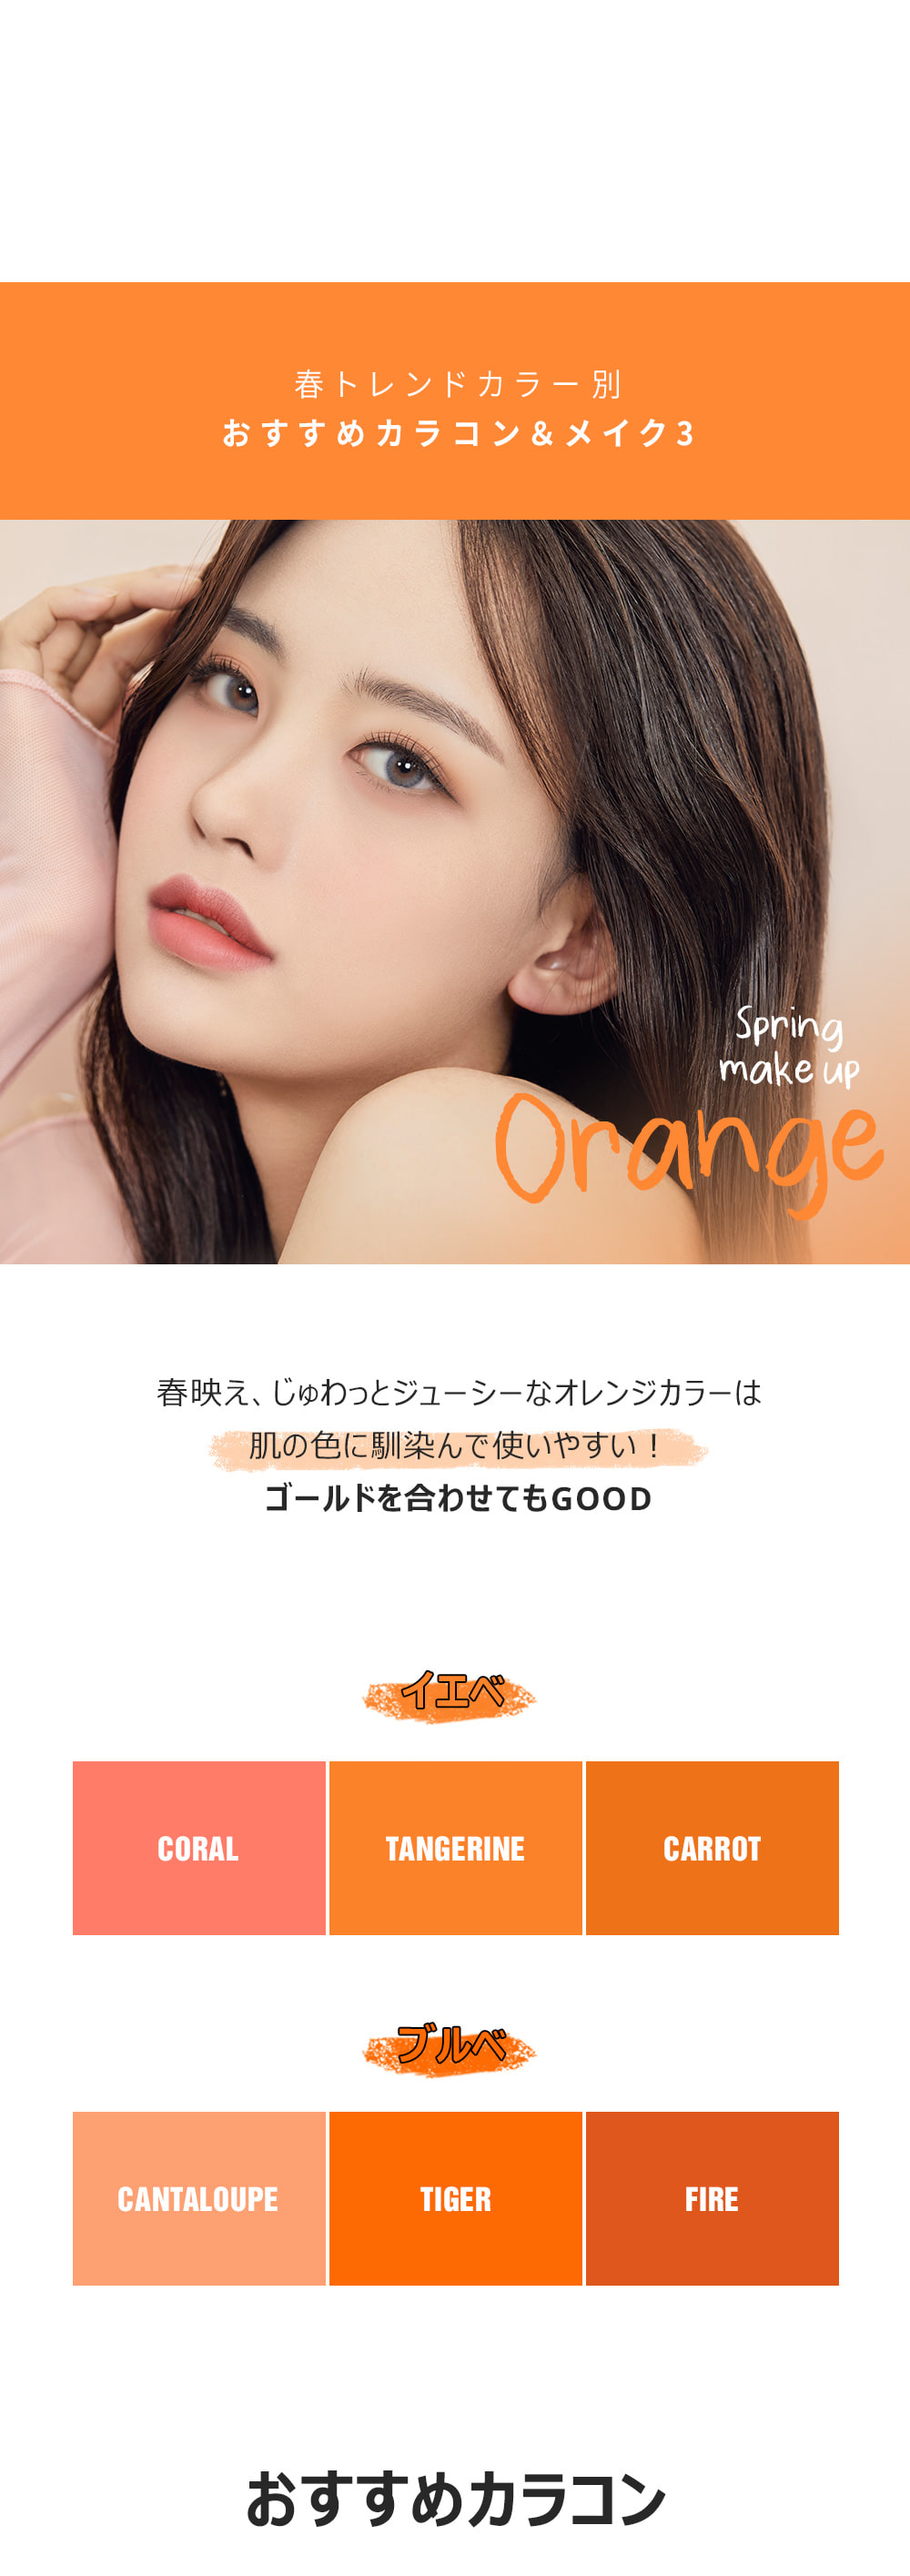 orange makeup